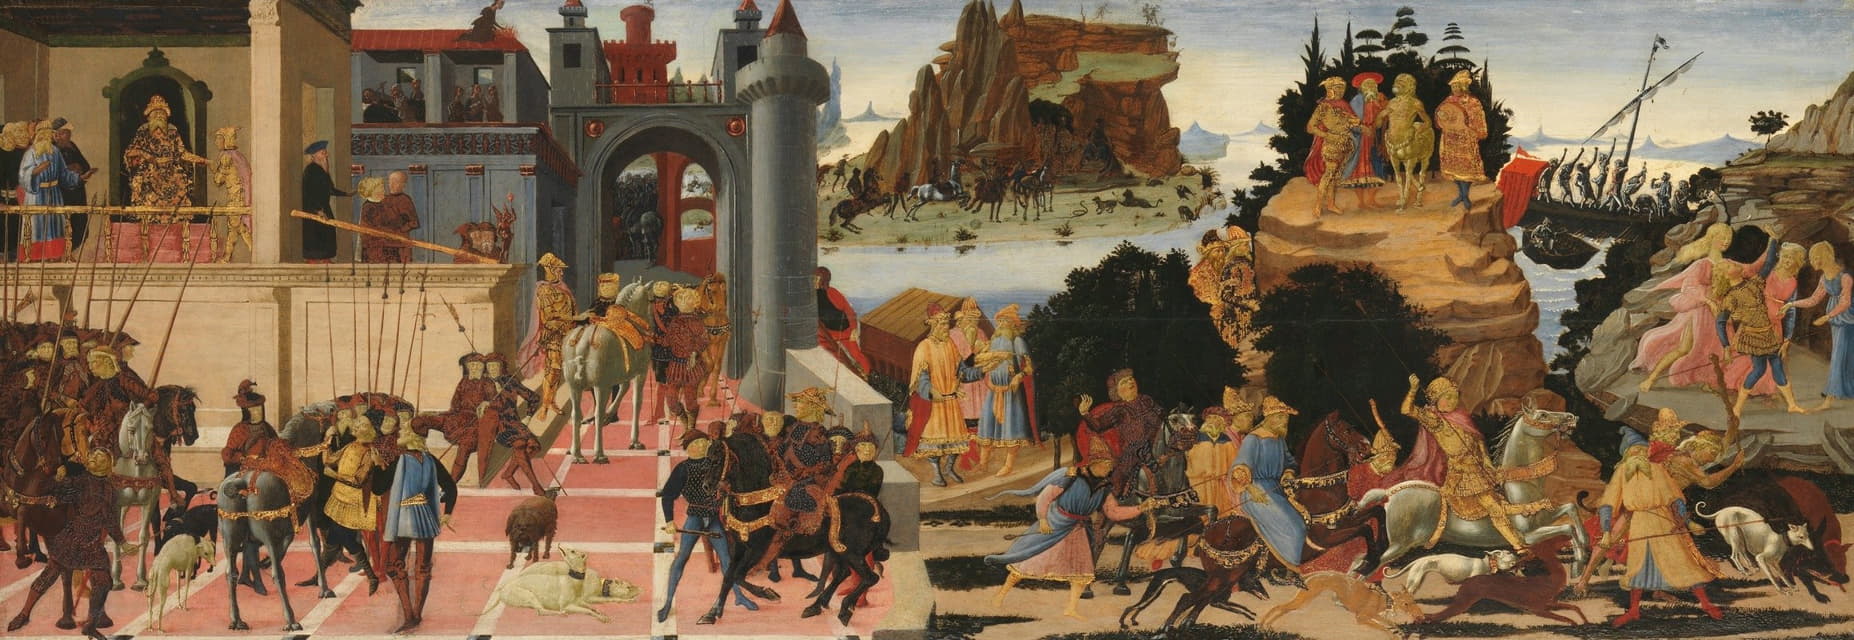 Jacopo del Sellaio - Scenes from the Story of the Argonauts